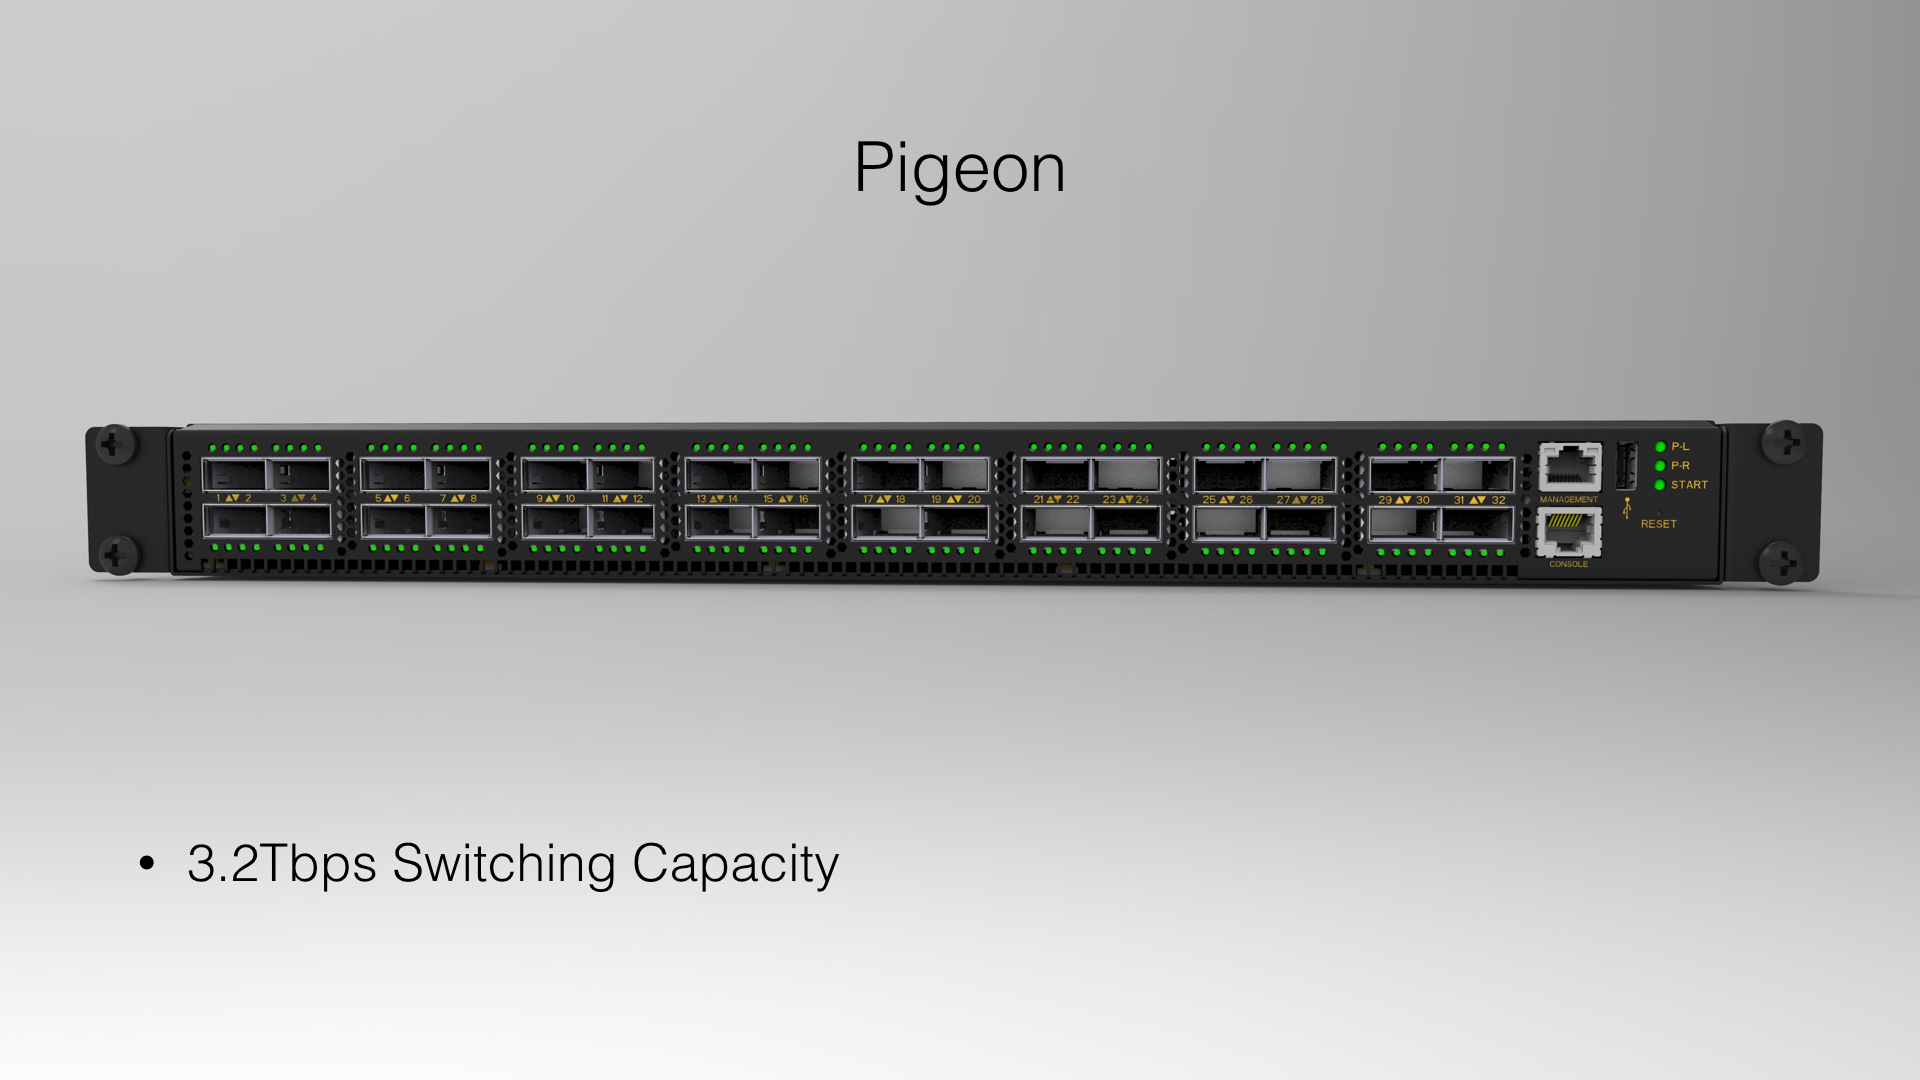 Pigeon switch